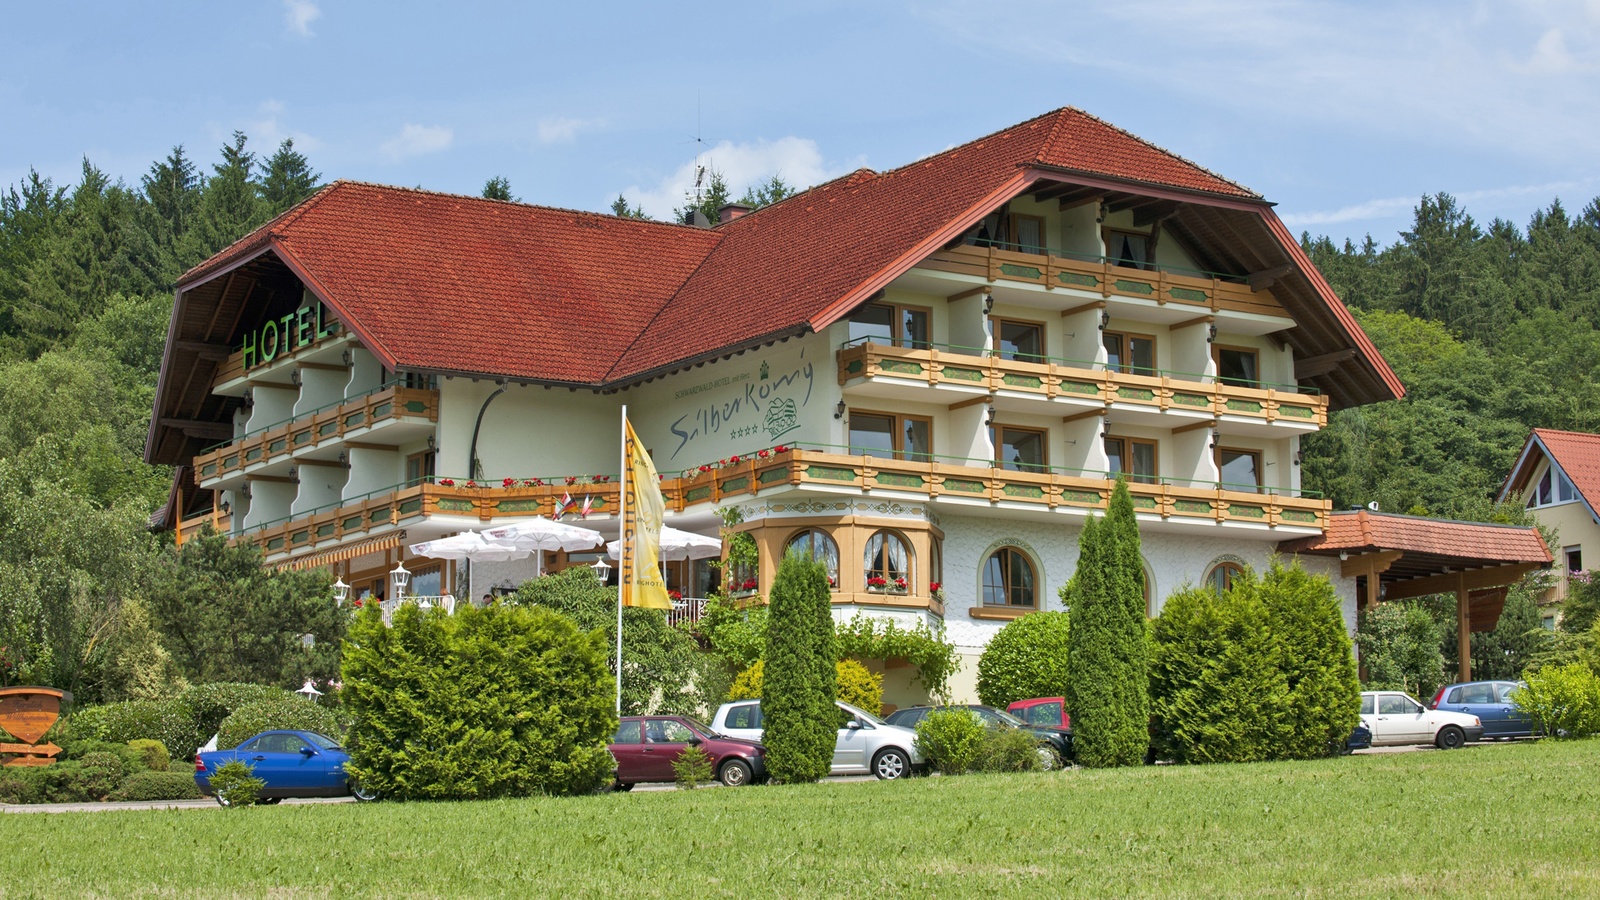 Ringhotel Silberkönig, Gutach i Schwarzwald i Sydtyskland